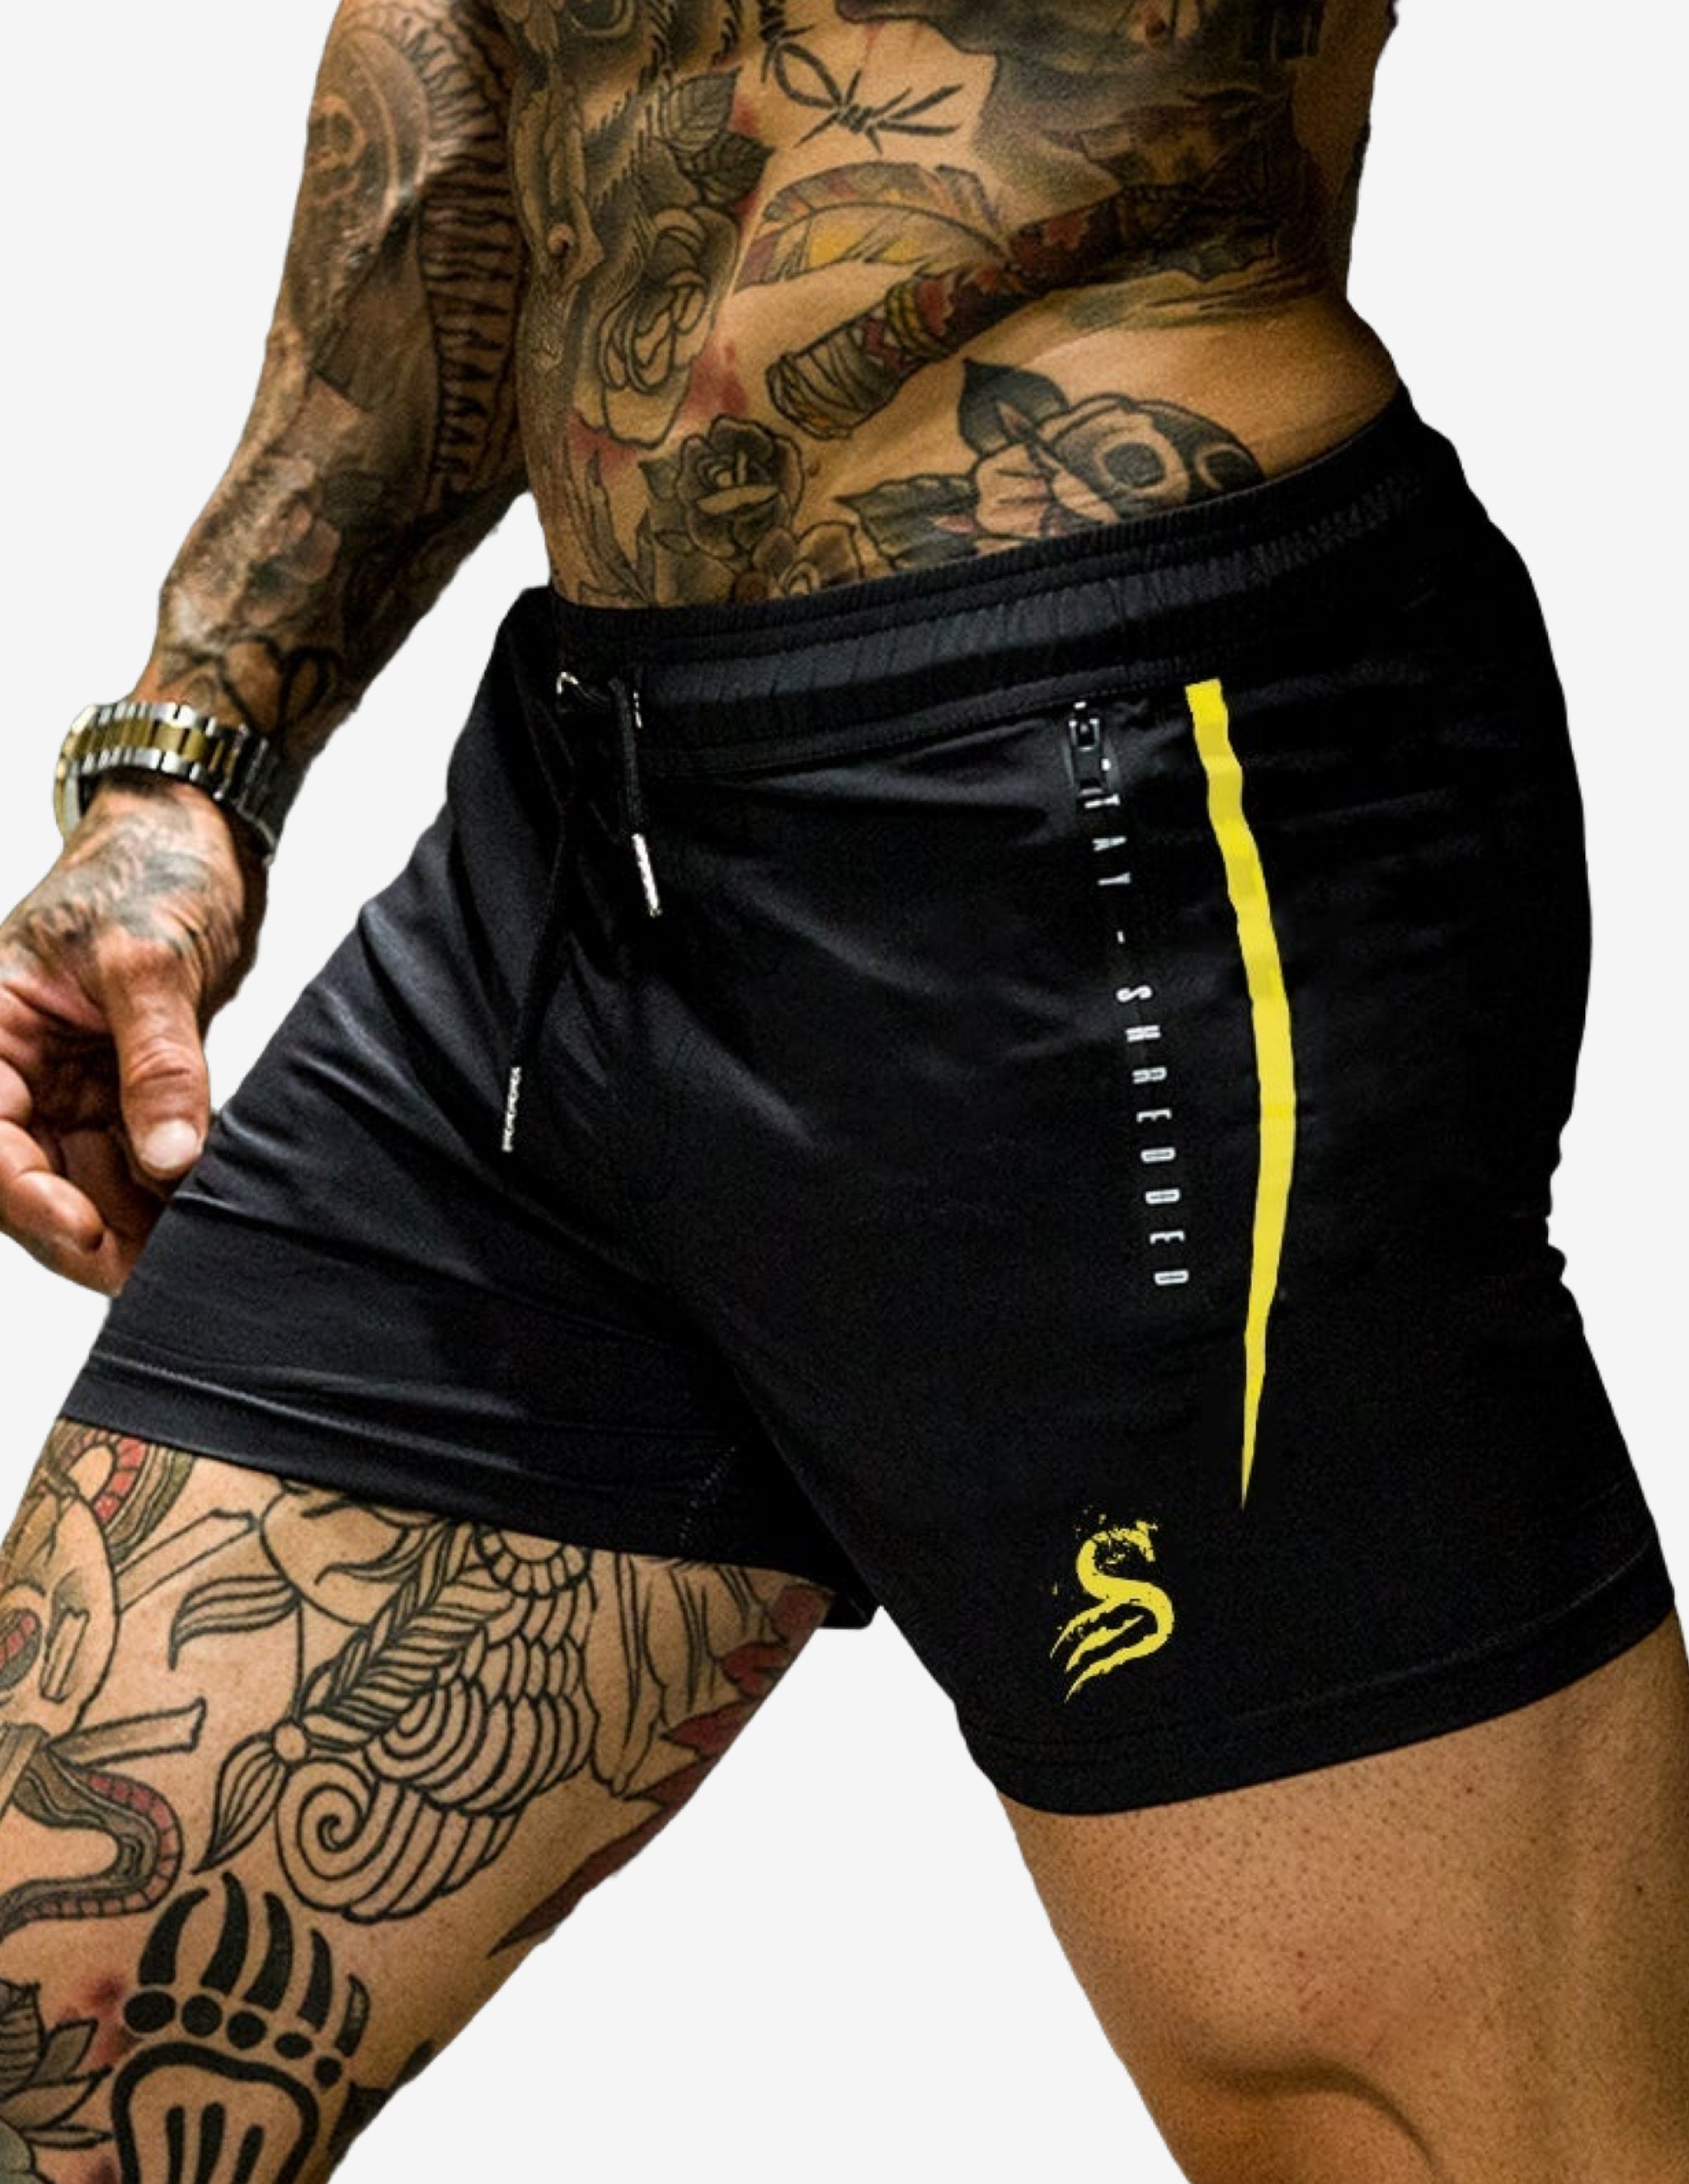 Quads of the Gods - Flex Lifting Shorts-Shorts Man-Stay Shredded-Guru Muscle